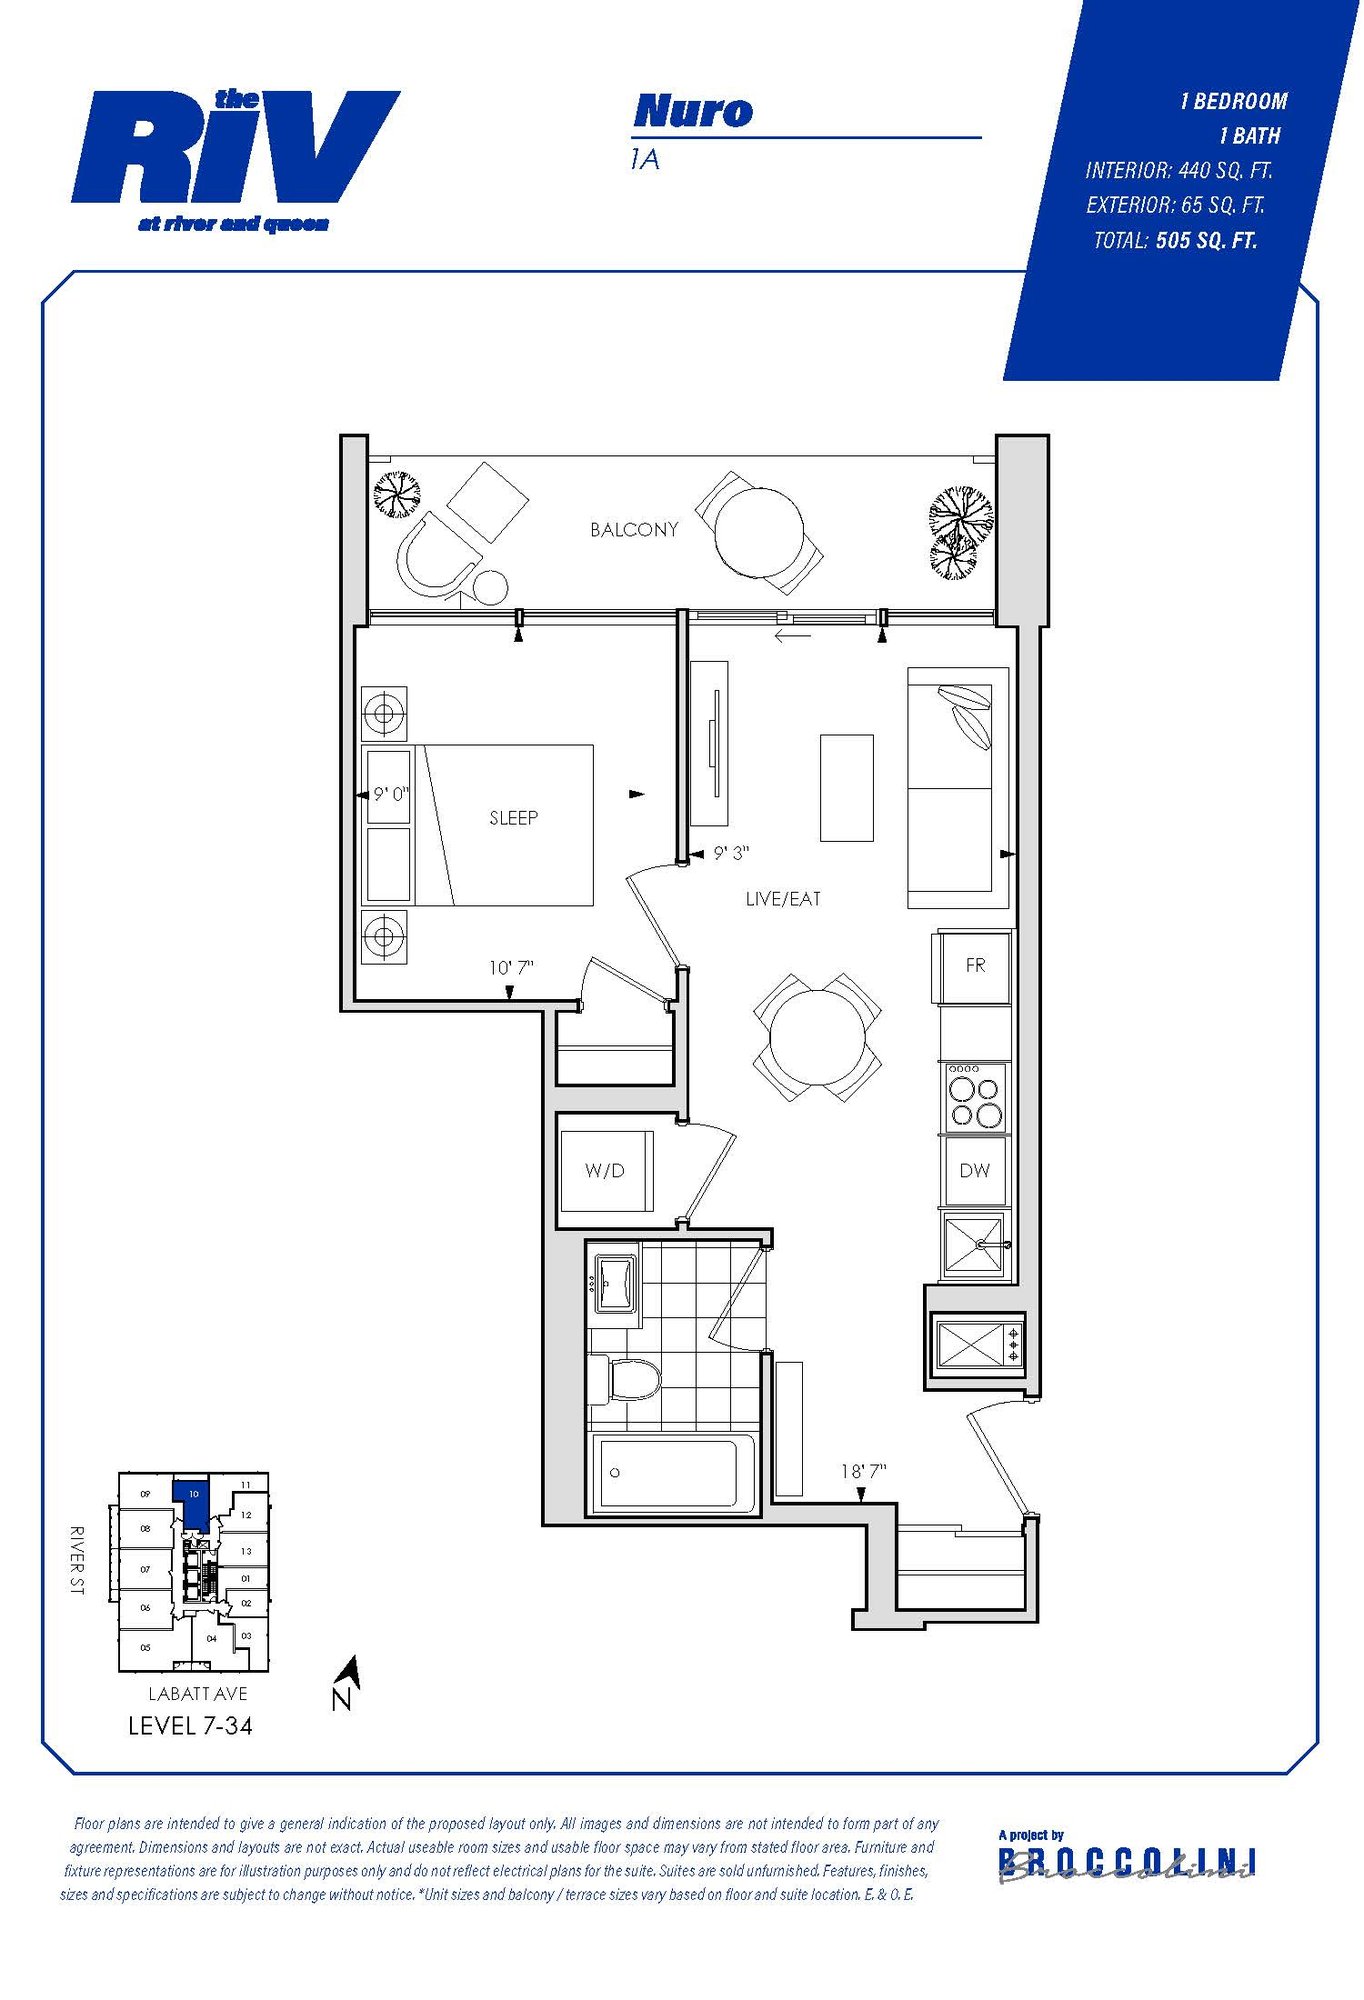 Floor plan for Nuro one bedroom unit in The Riv